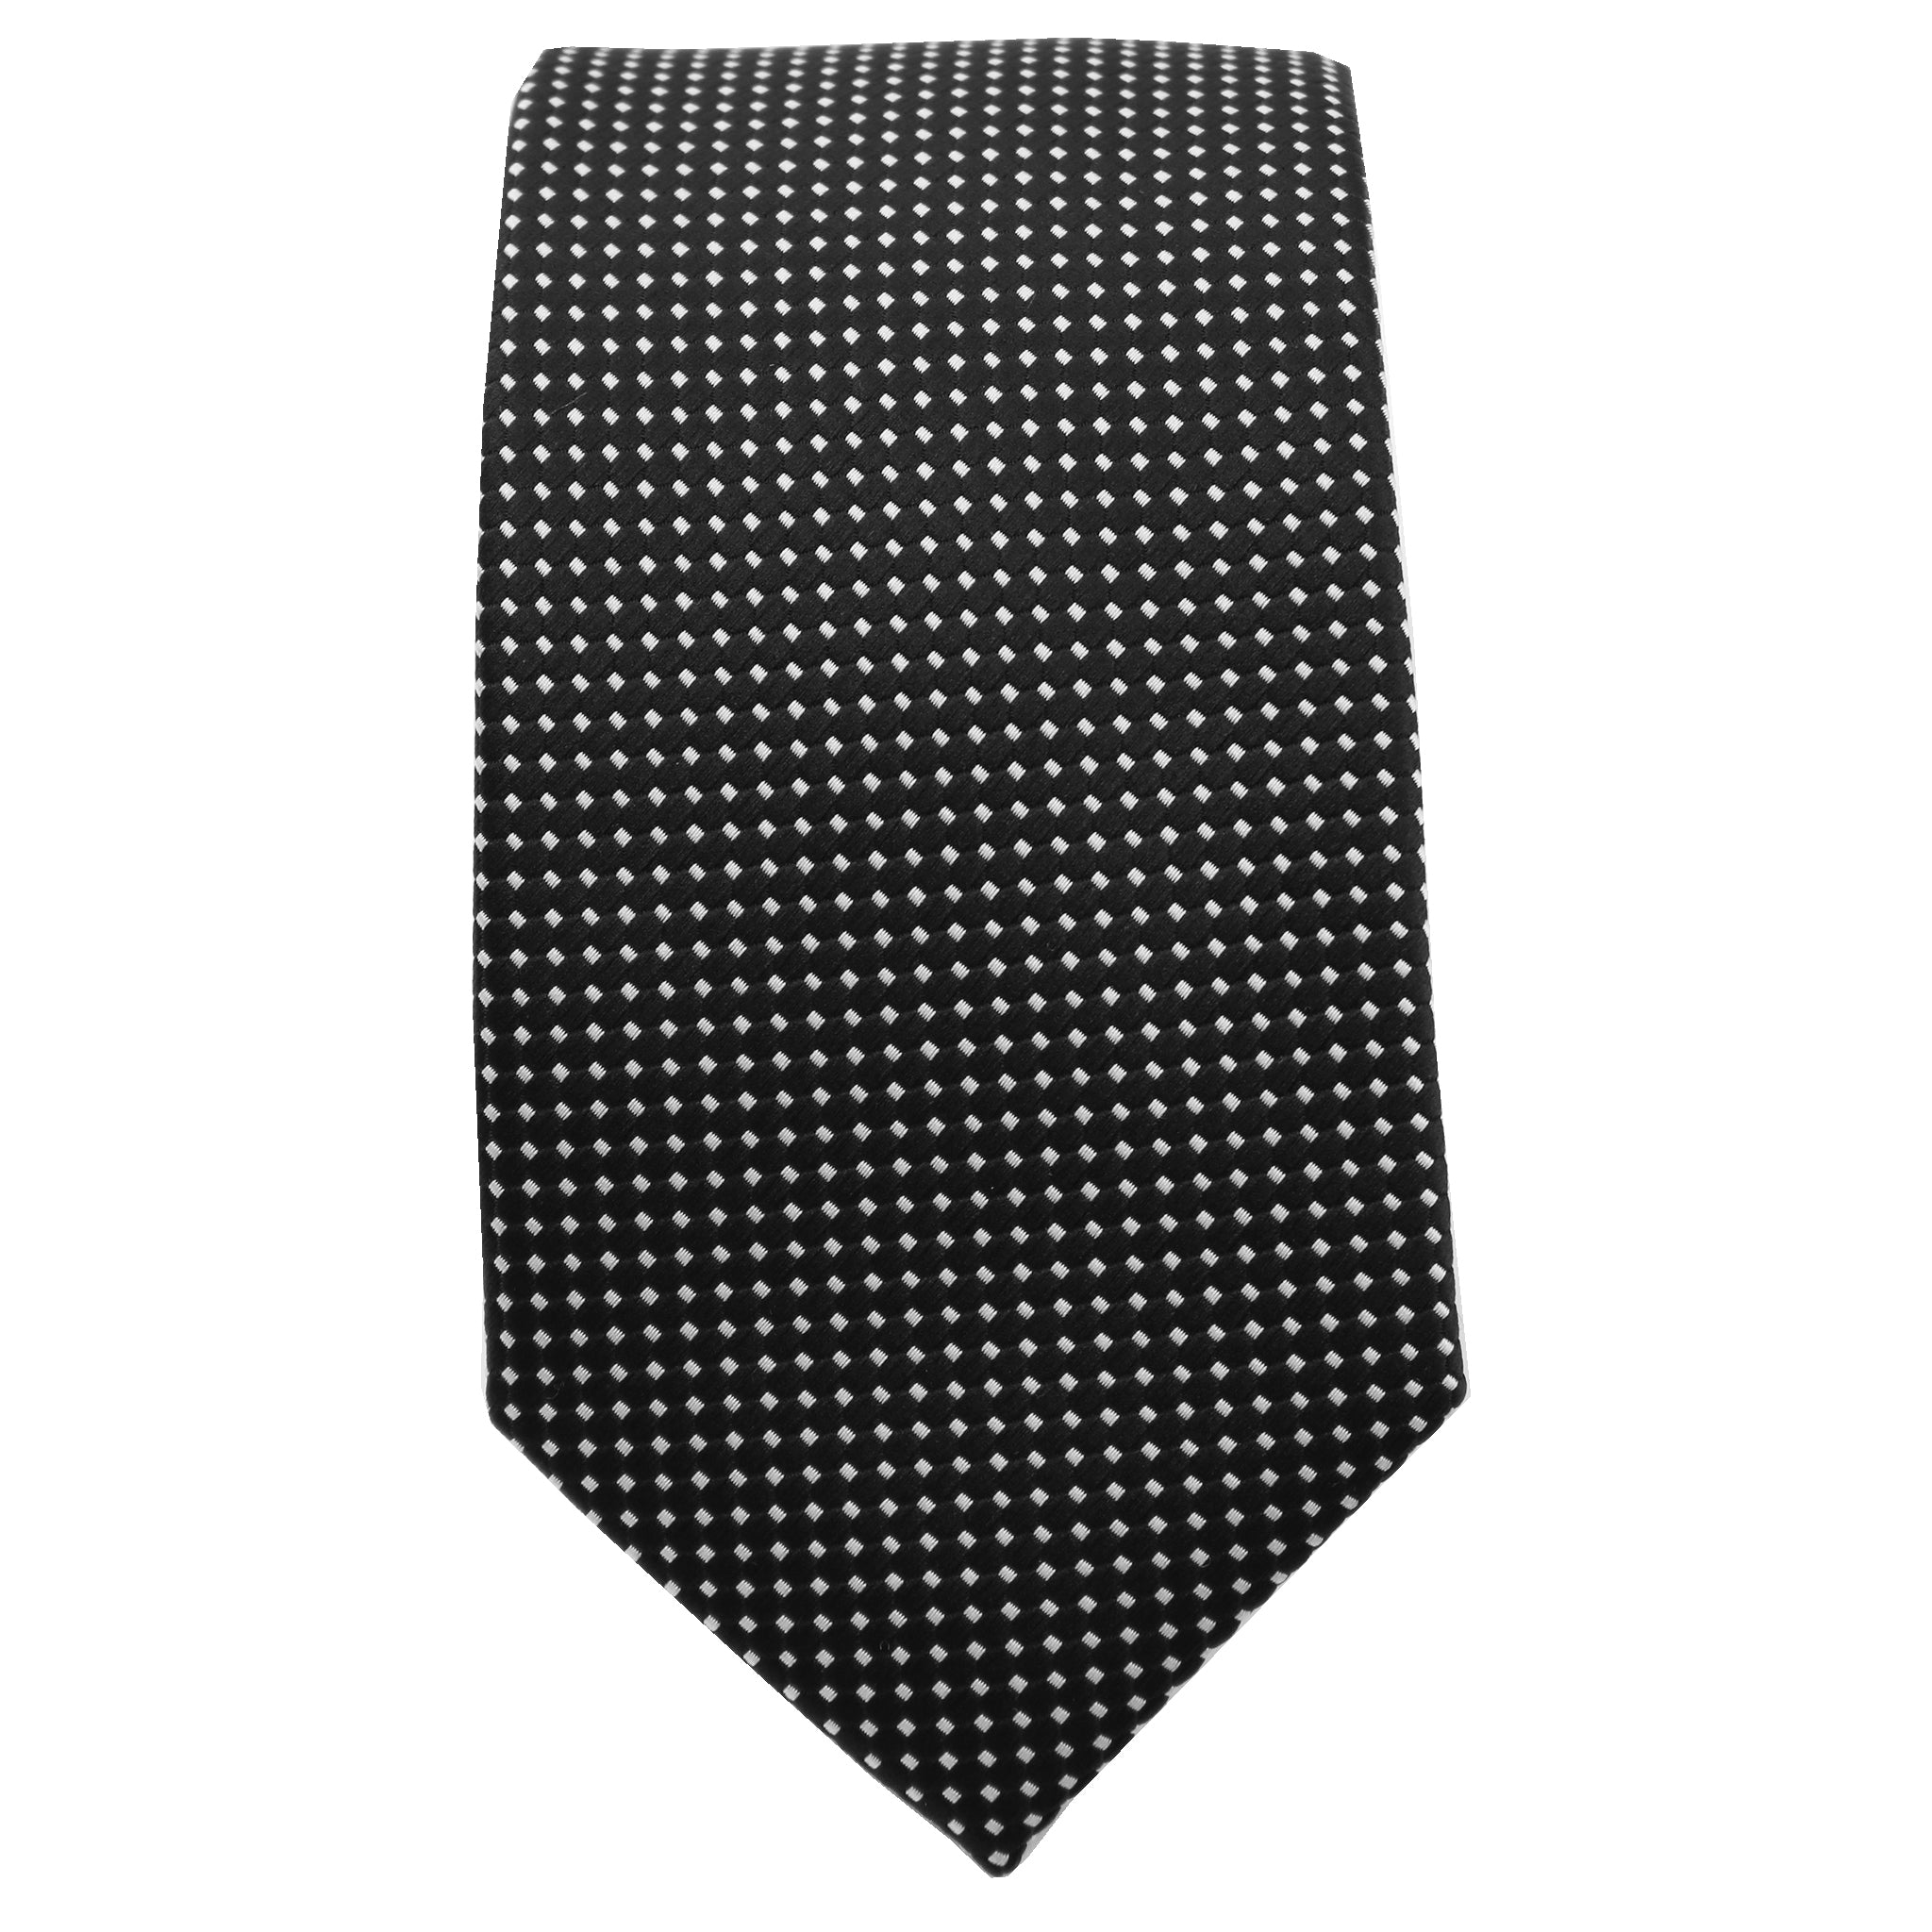 Black & White Checkered Tie